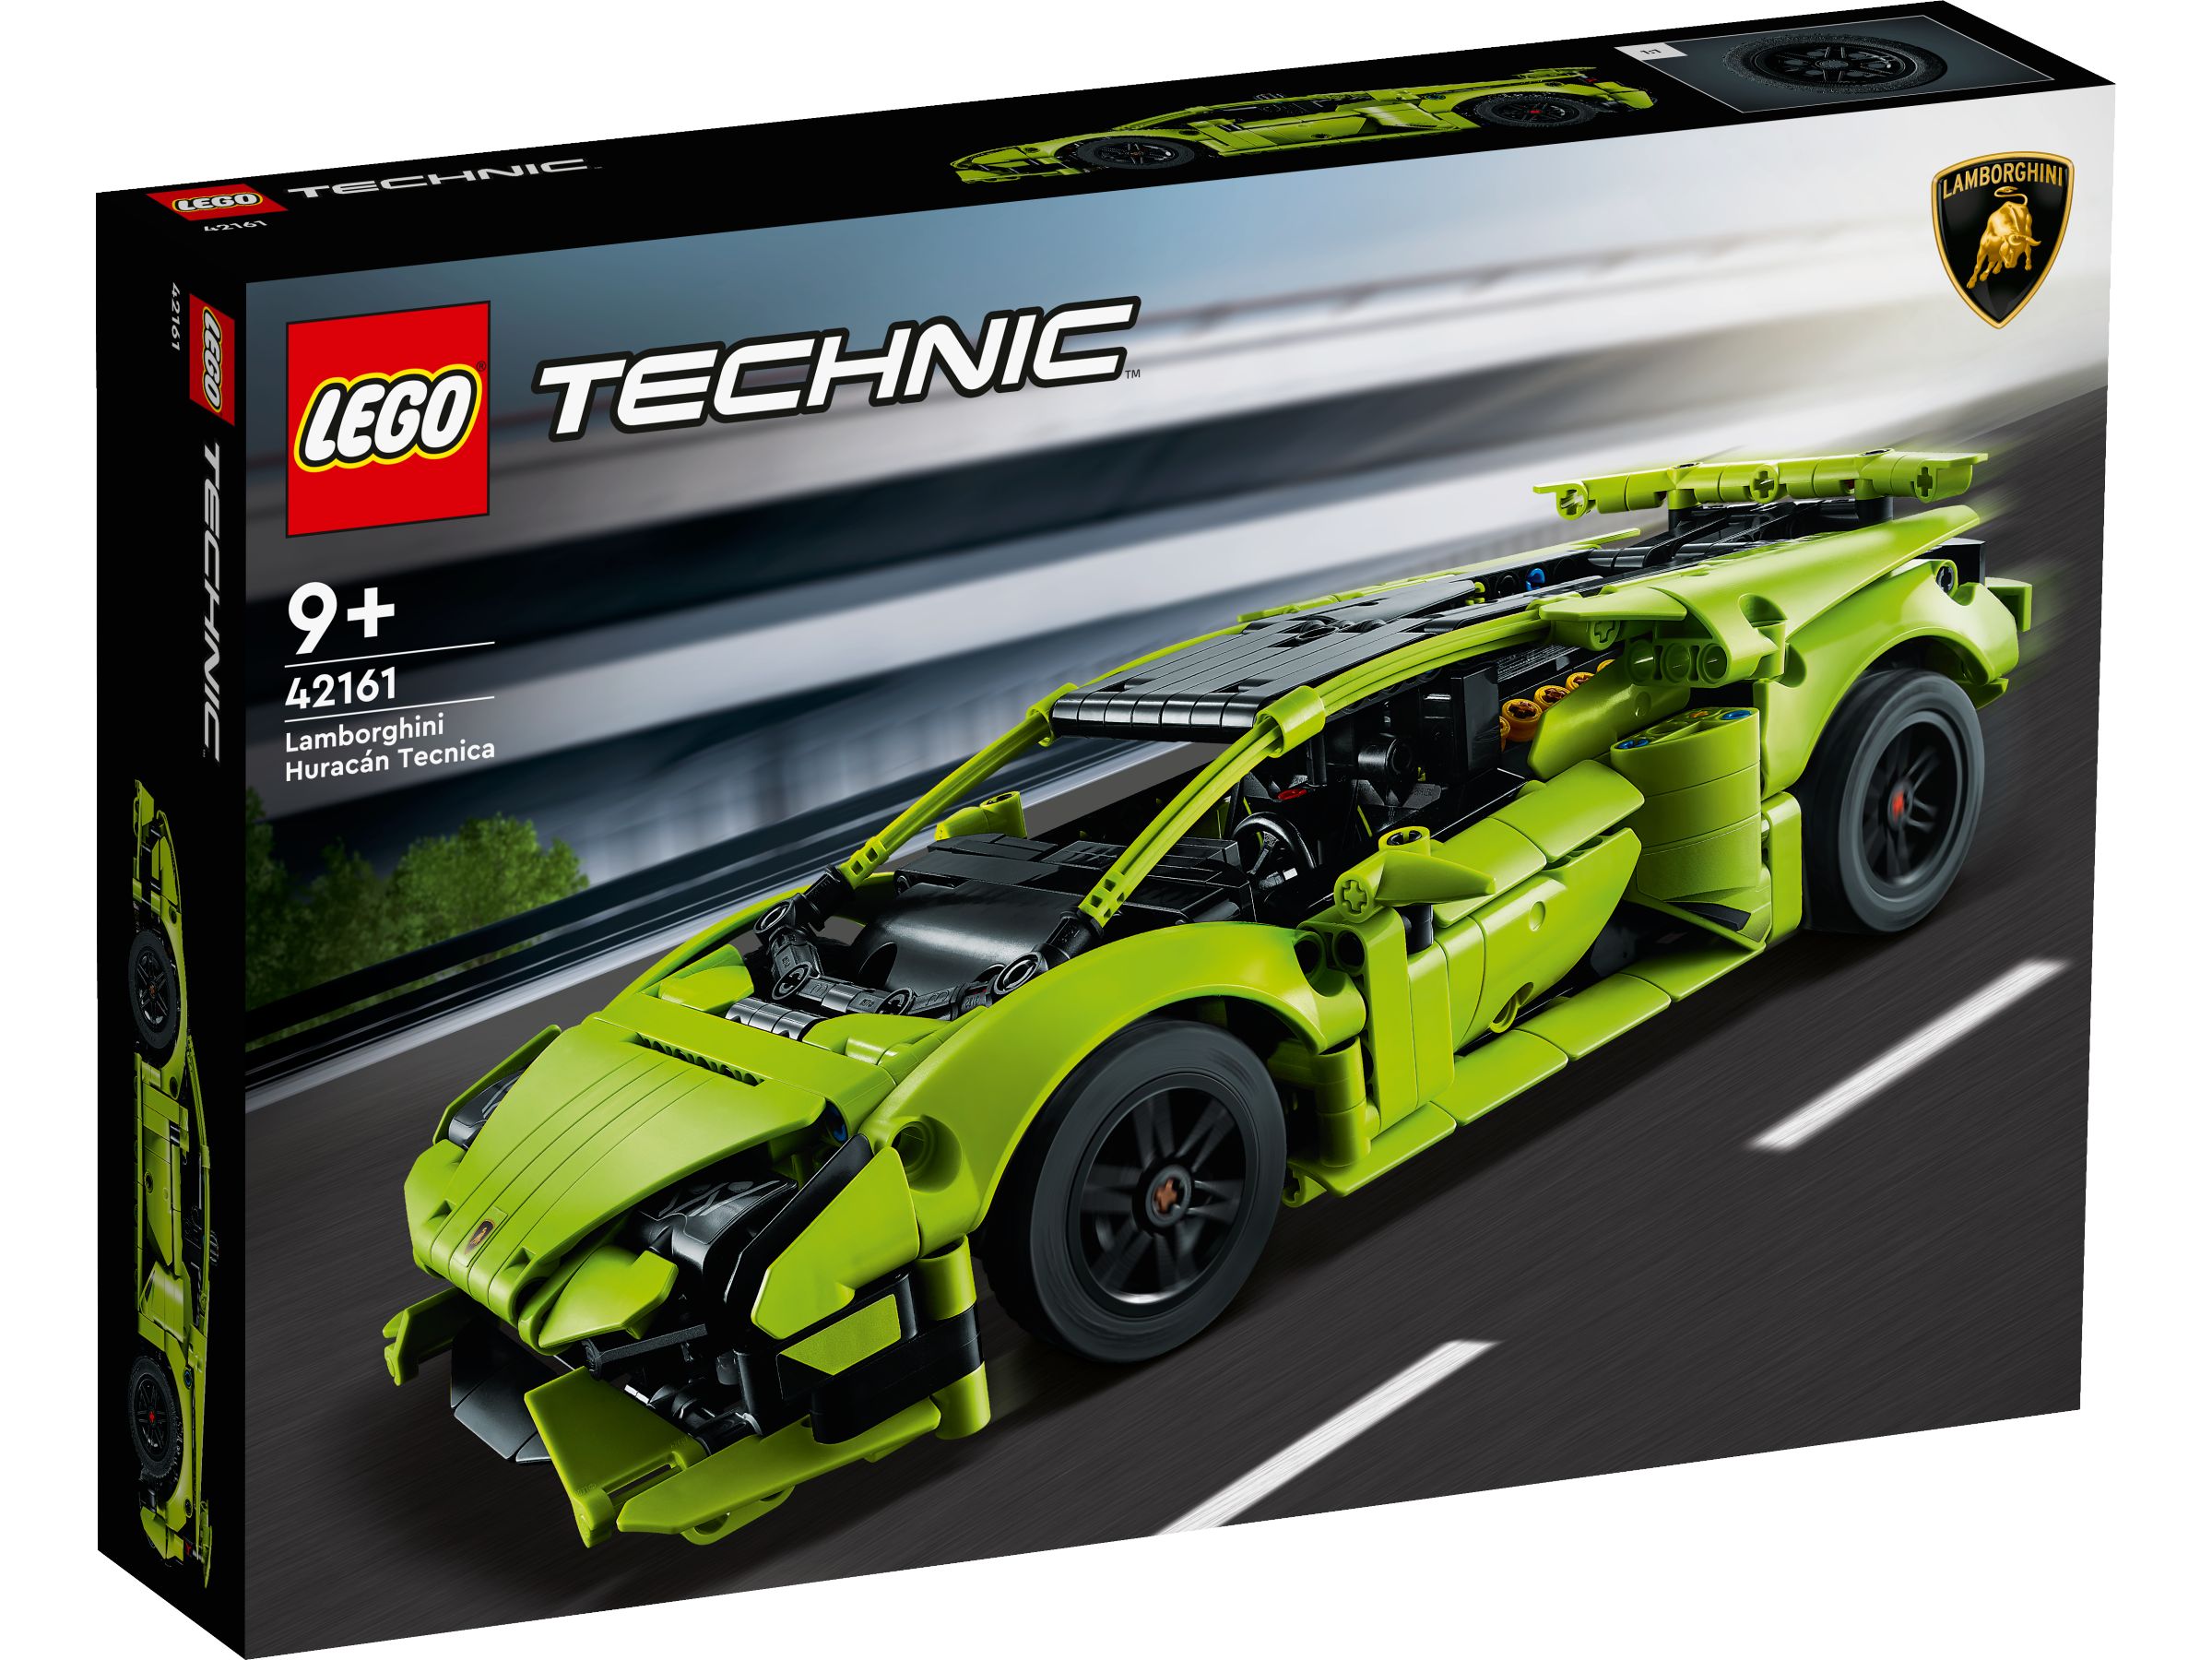 LEGO Technic 42161 Lamborghini Huracán Tecnica LEGO_42161_Box1_v29.jpg